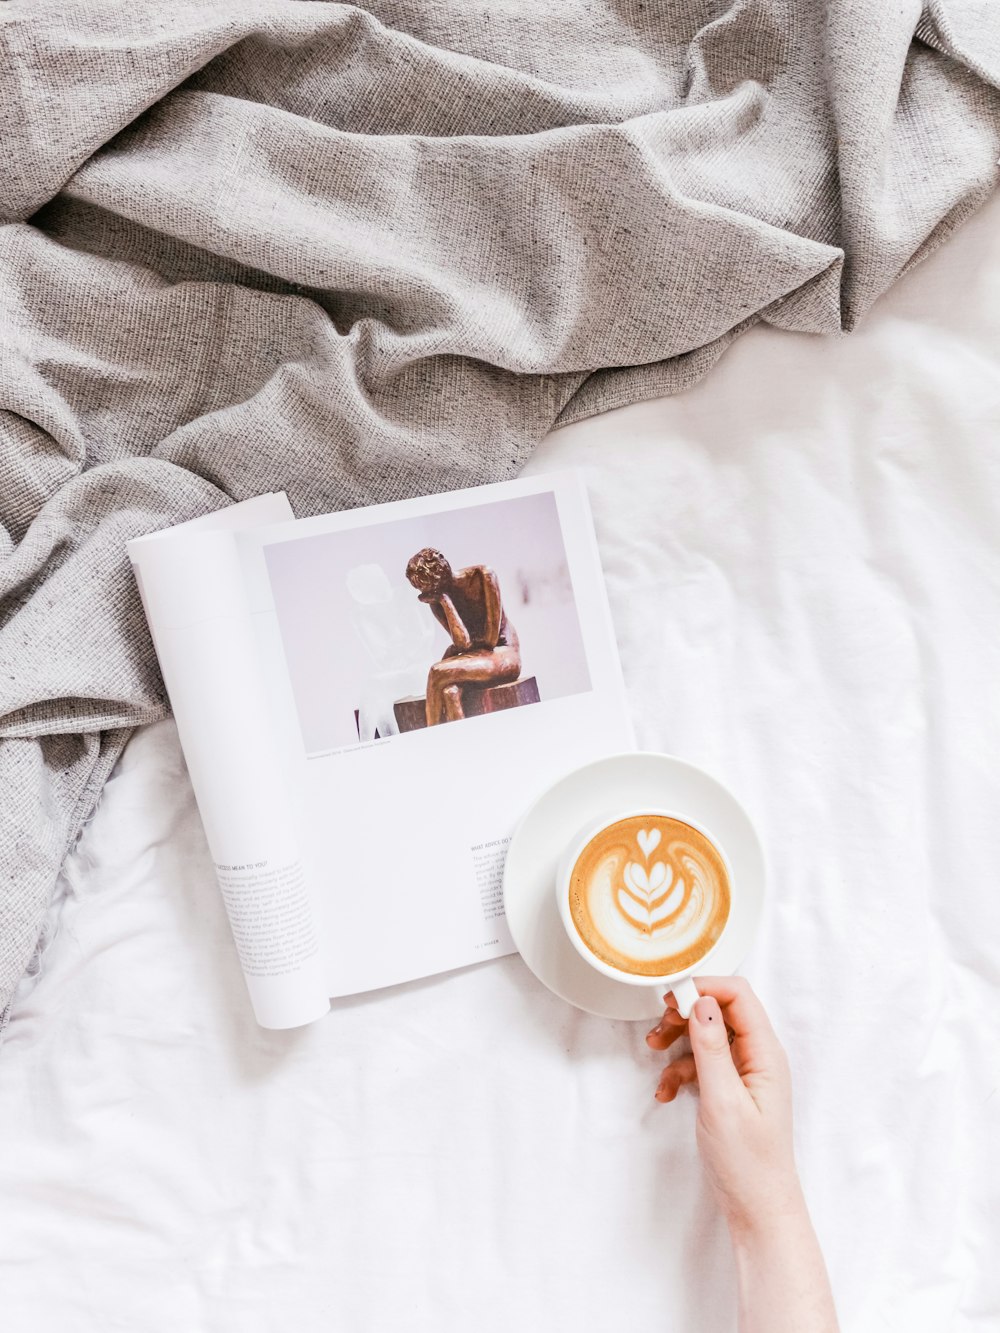 latte and magazine on white comforter